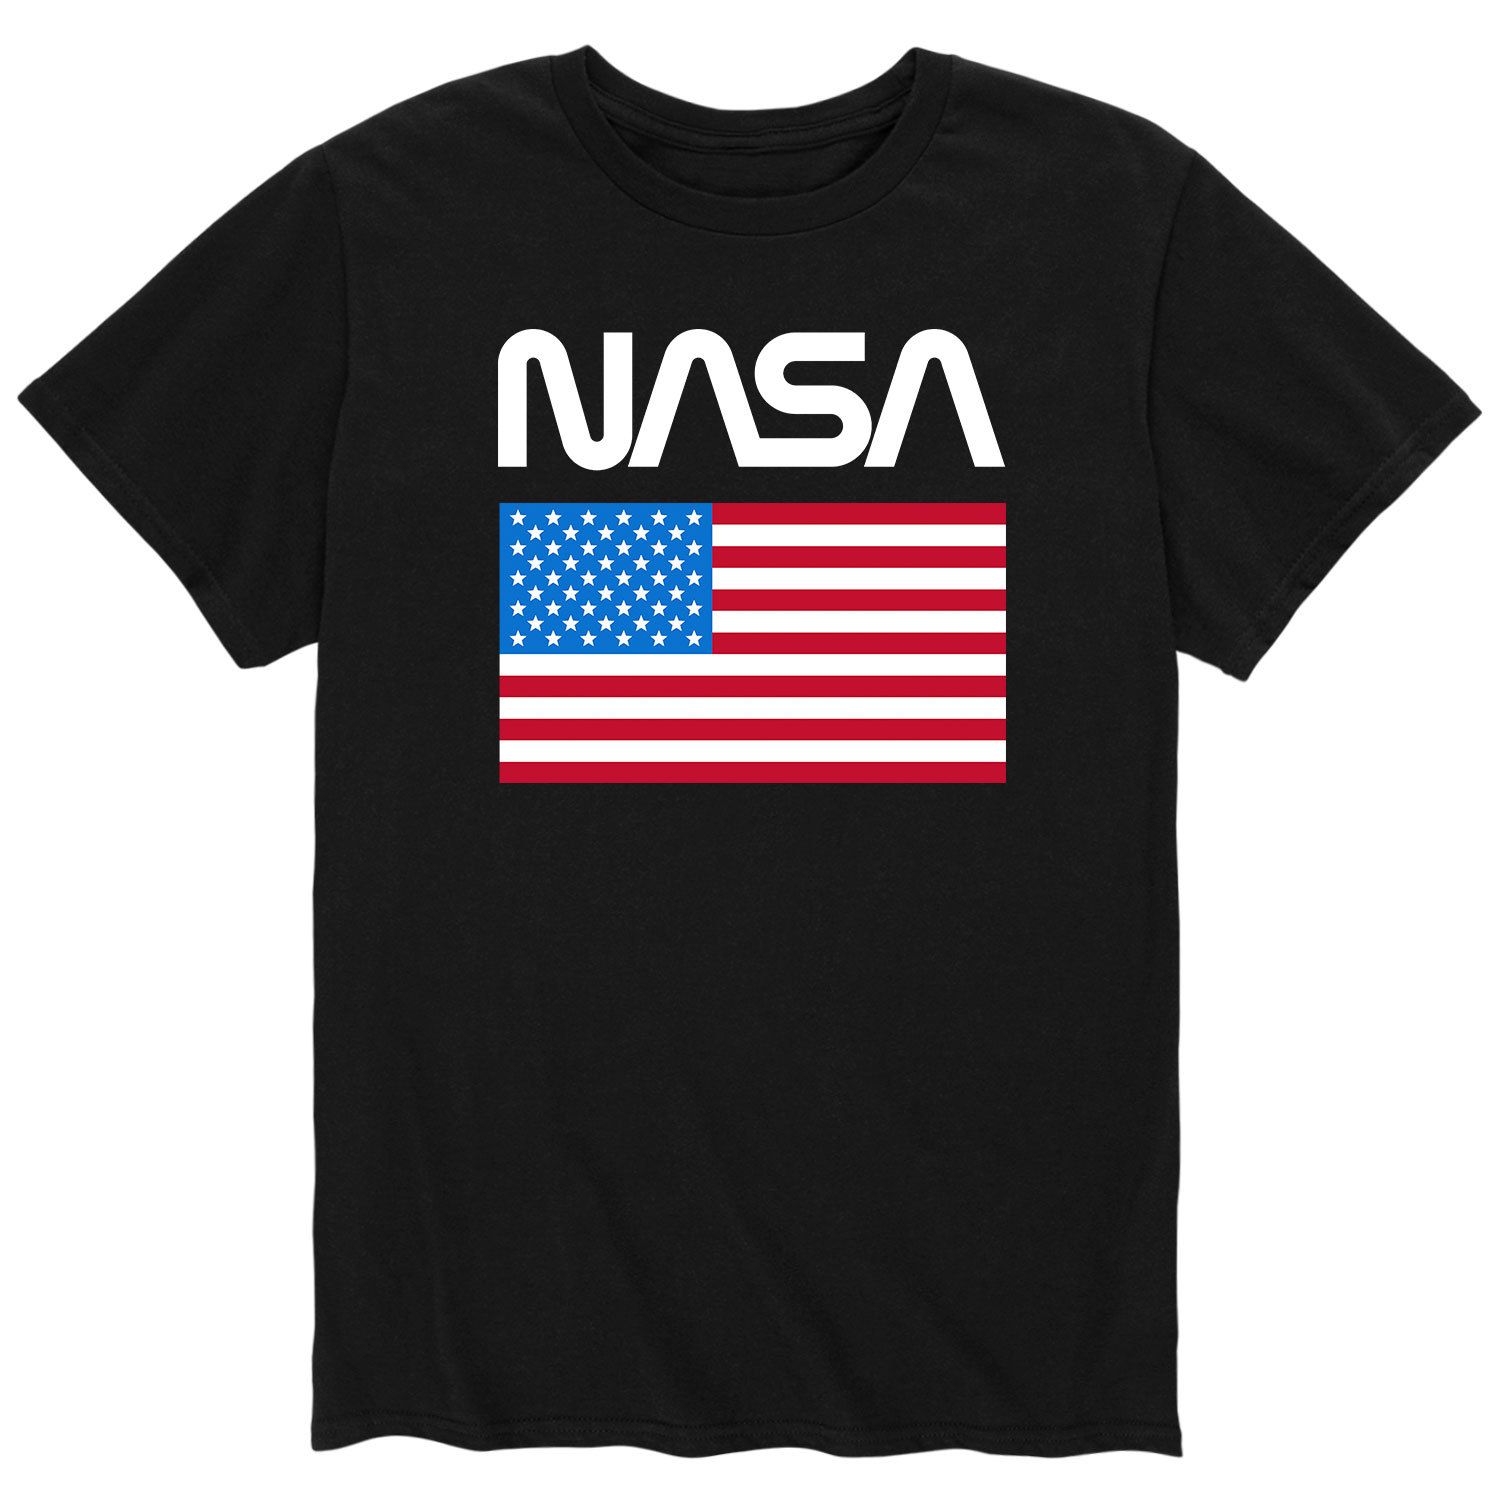 Мужская футболка NASA с американским флагом Licensed Character